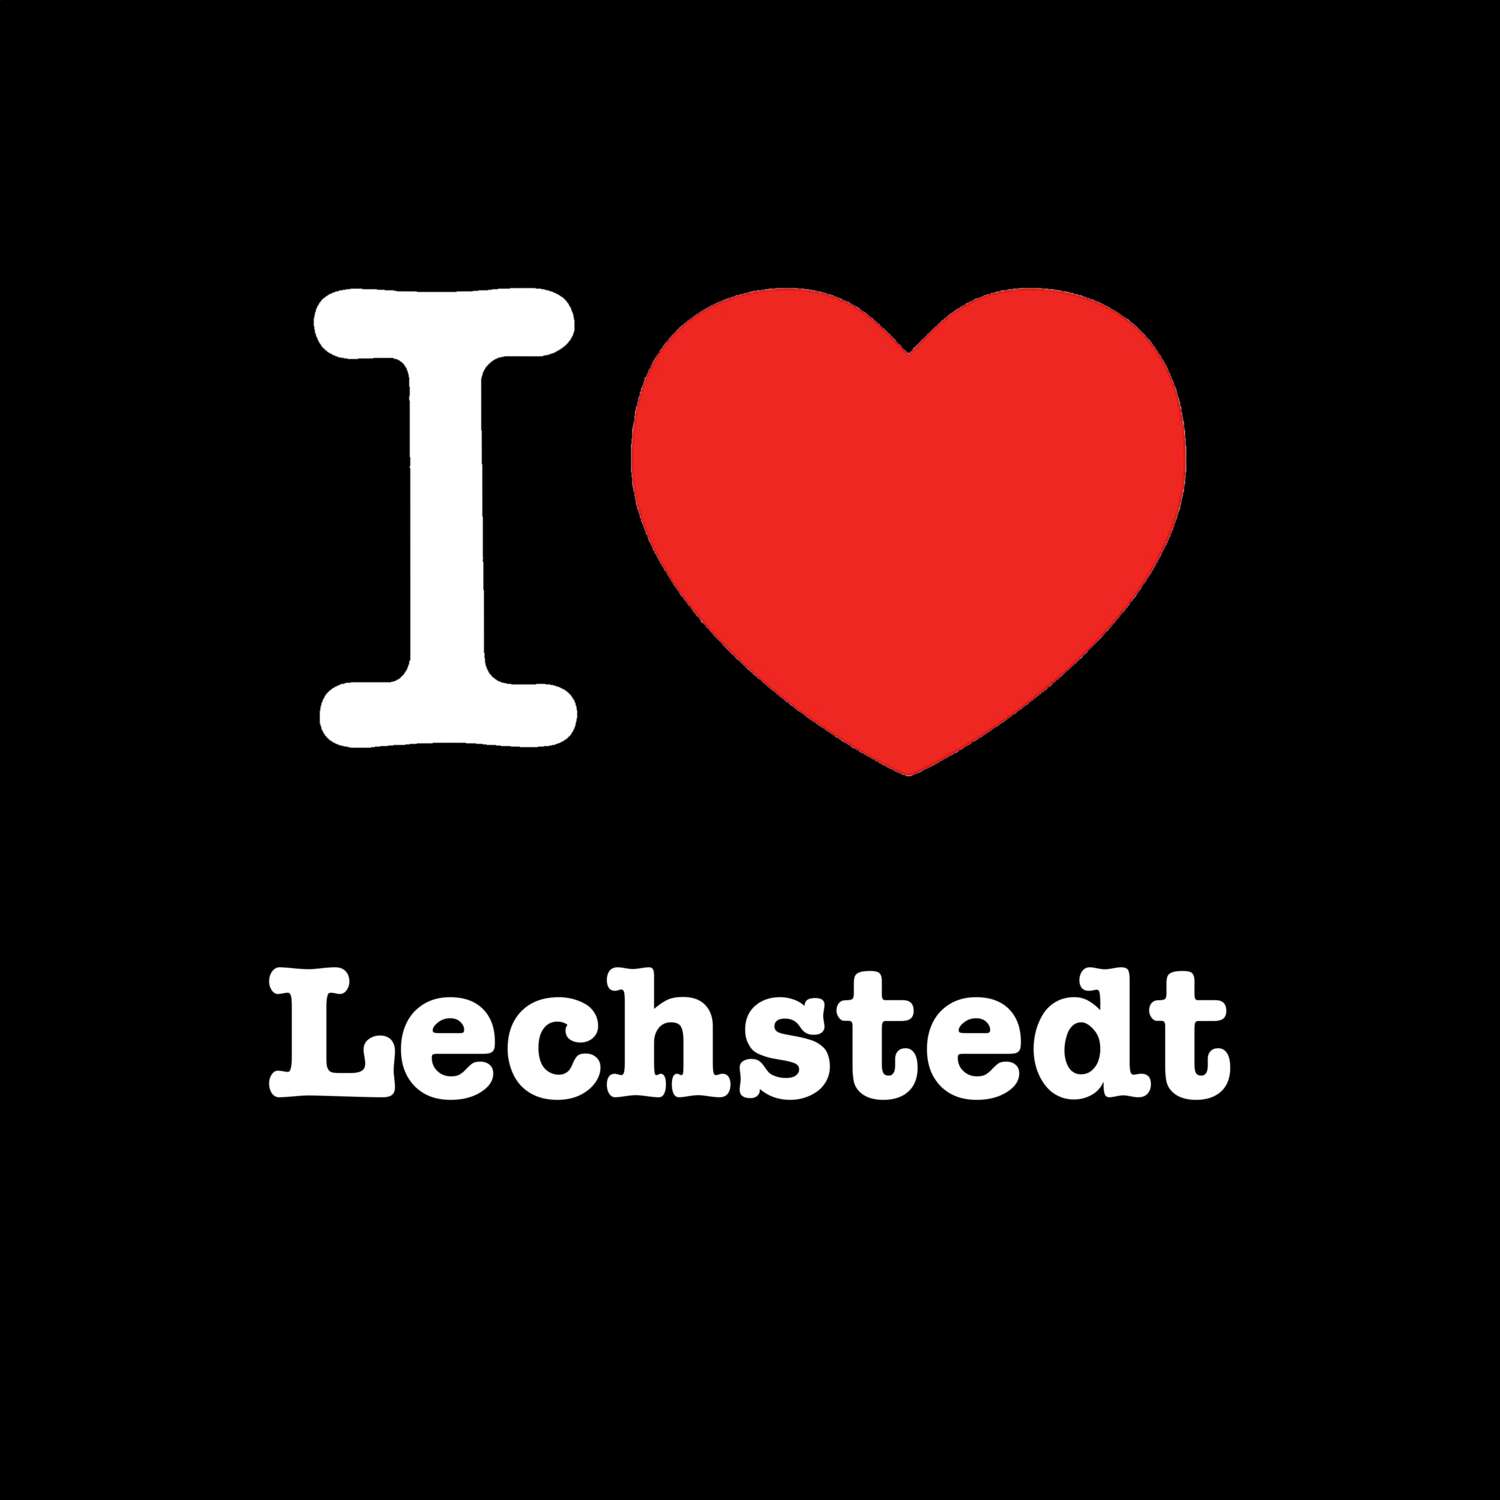 Lechstedt T-Shirt »I love«